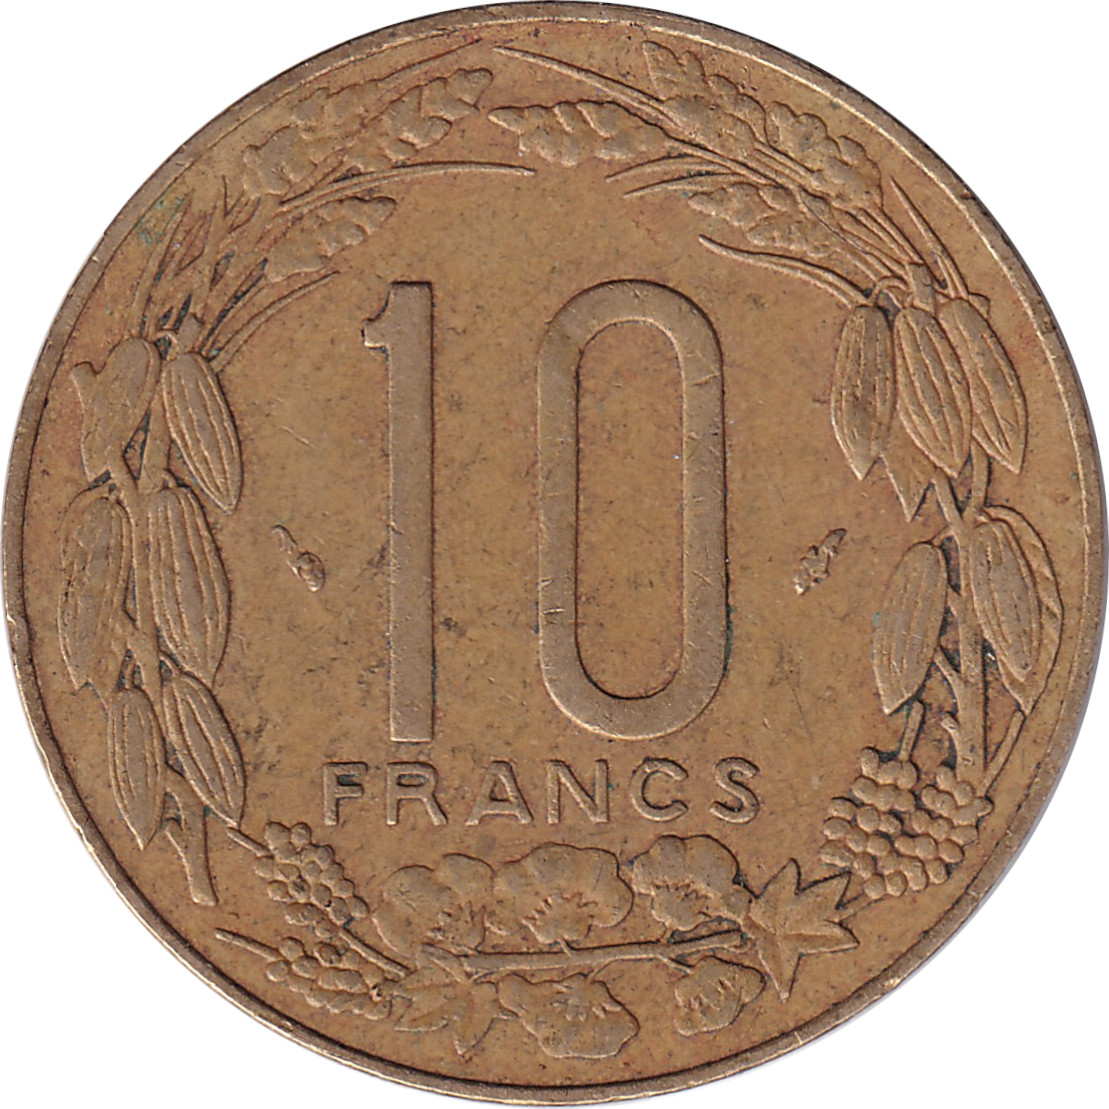 10 francs - Antilopes